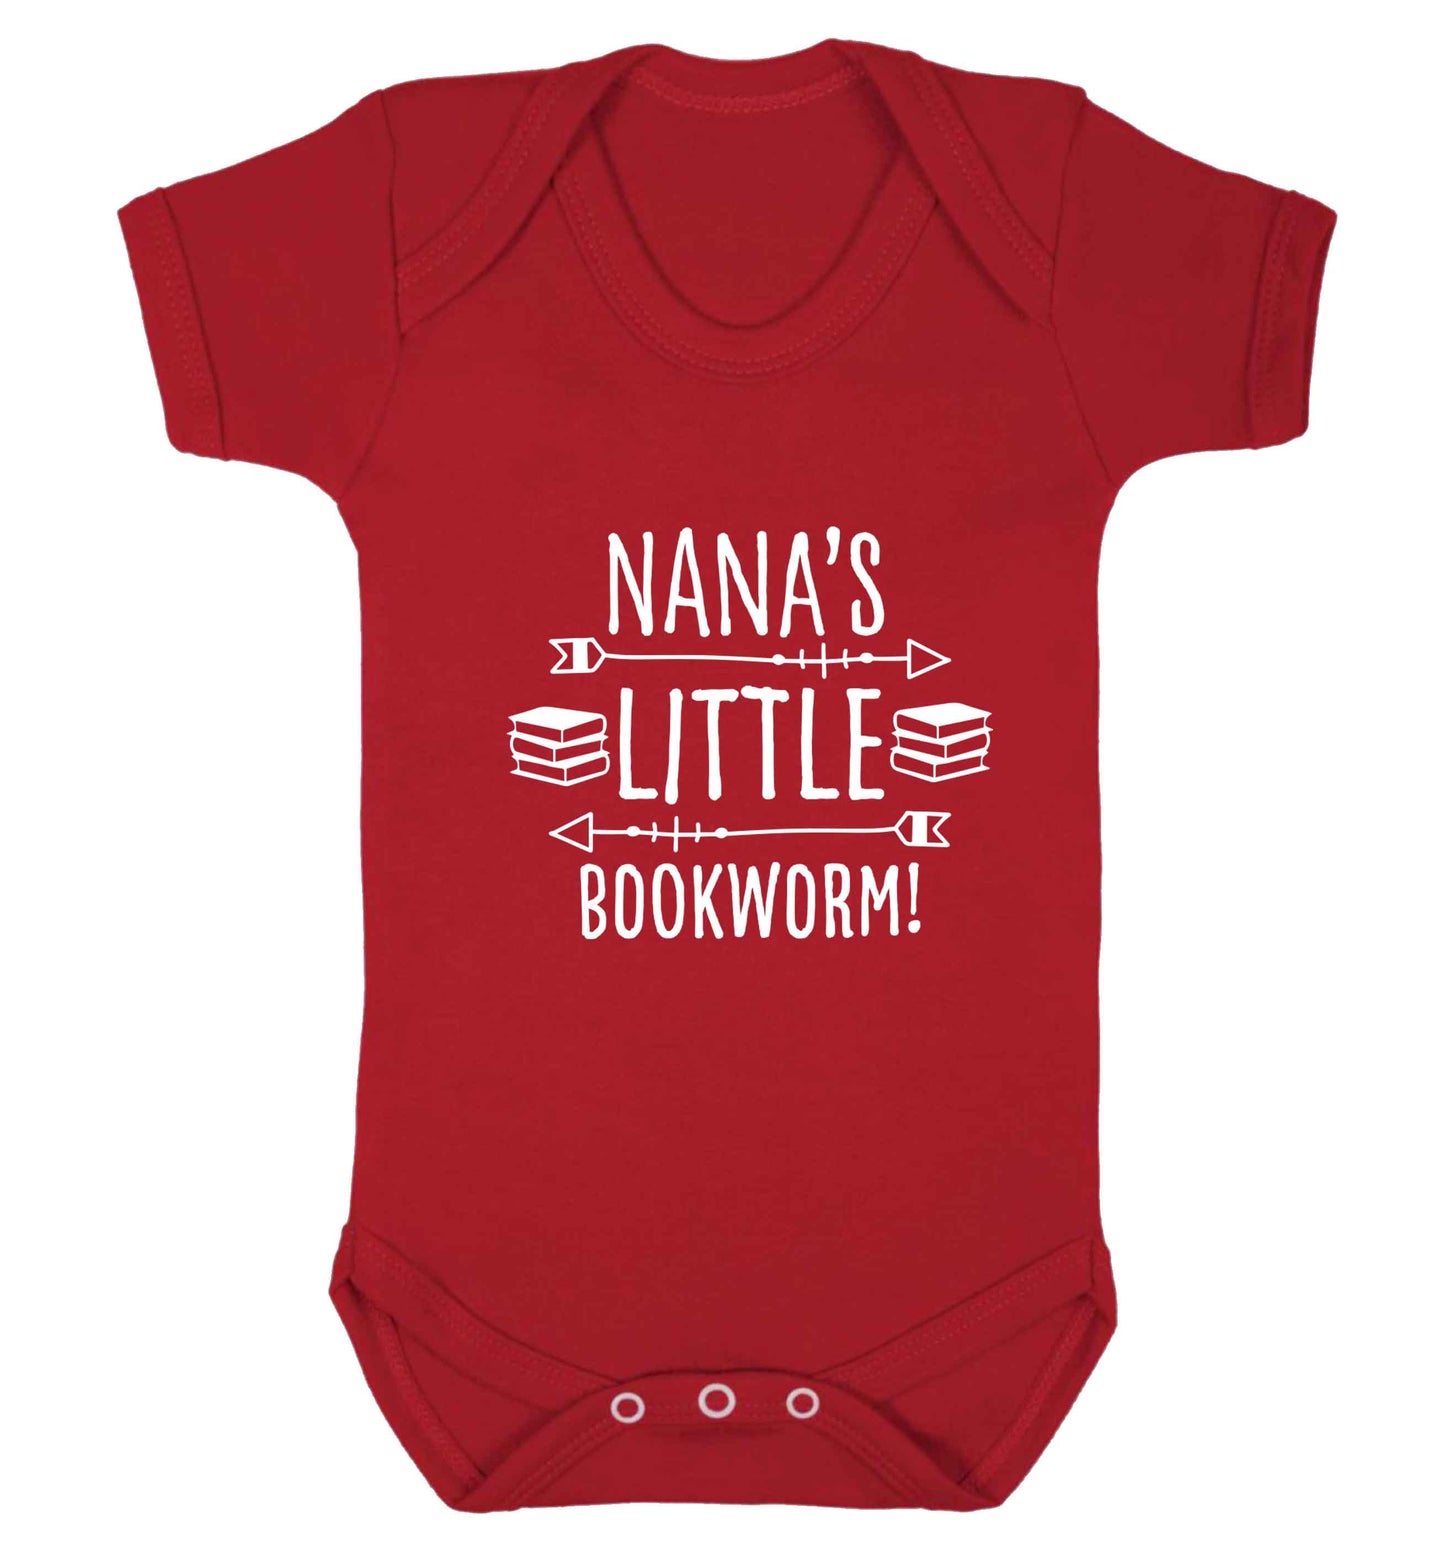 Nana's little bookworm baby vest red 18-24 months